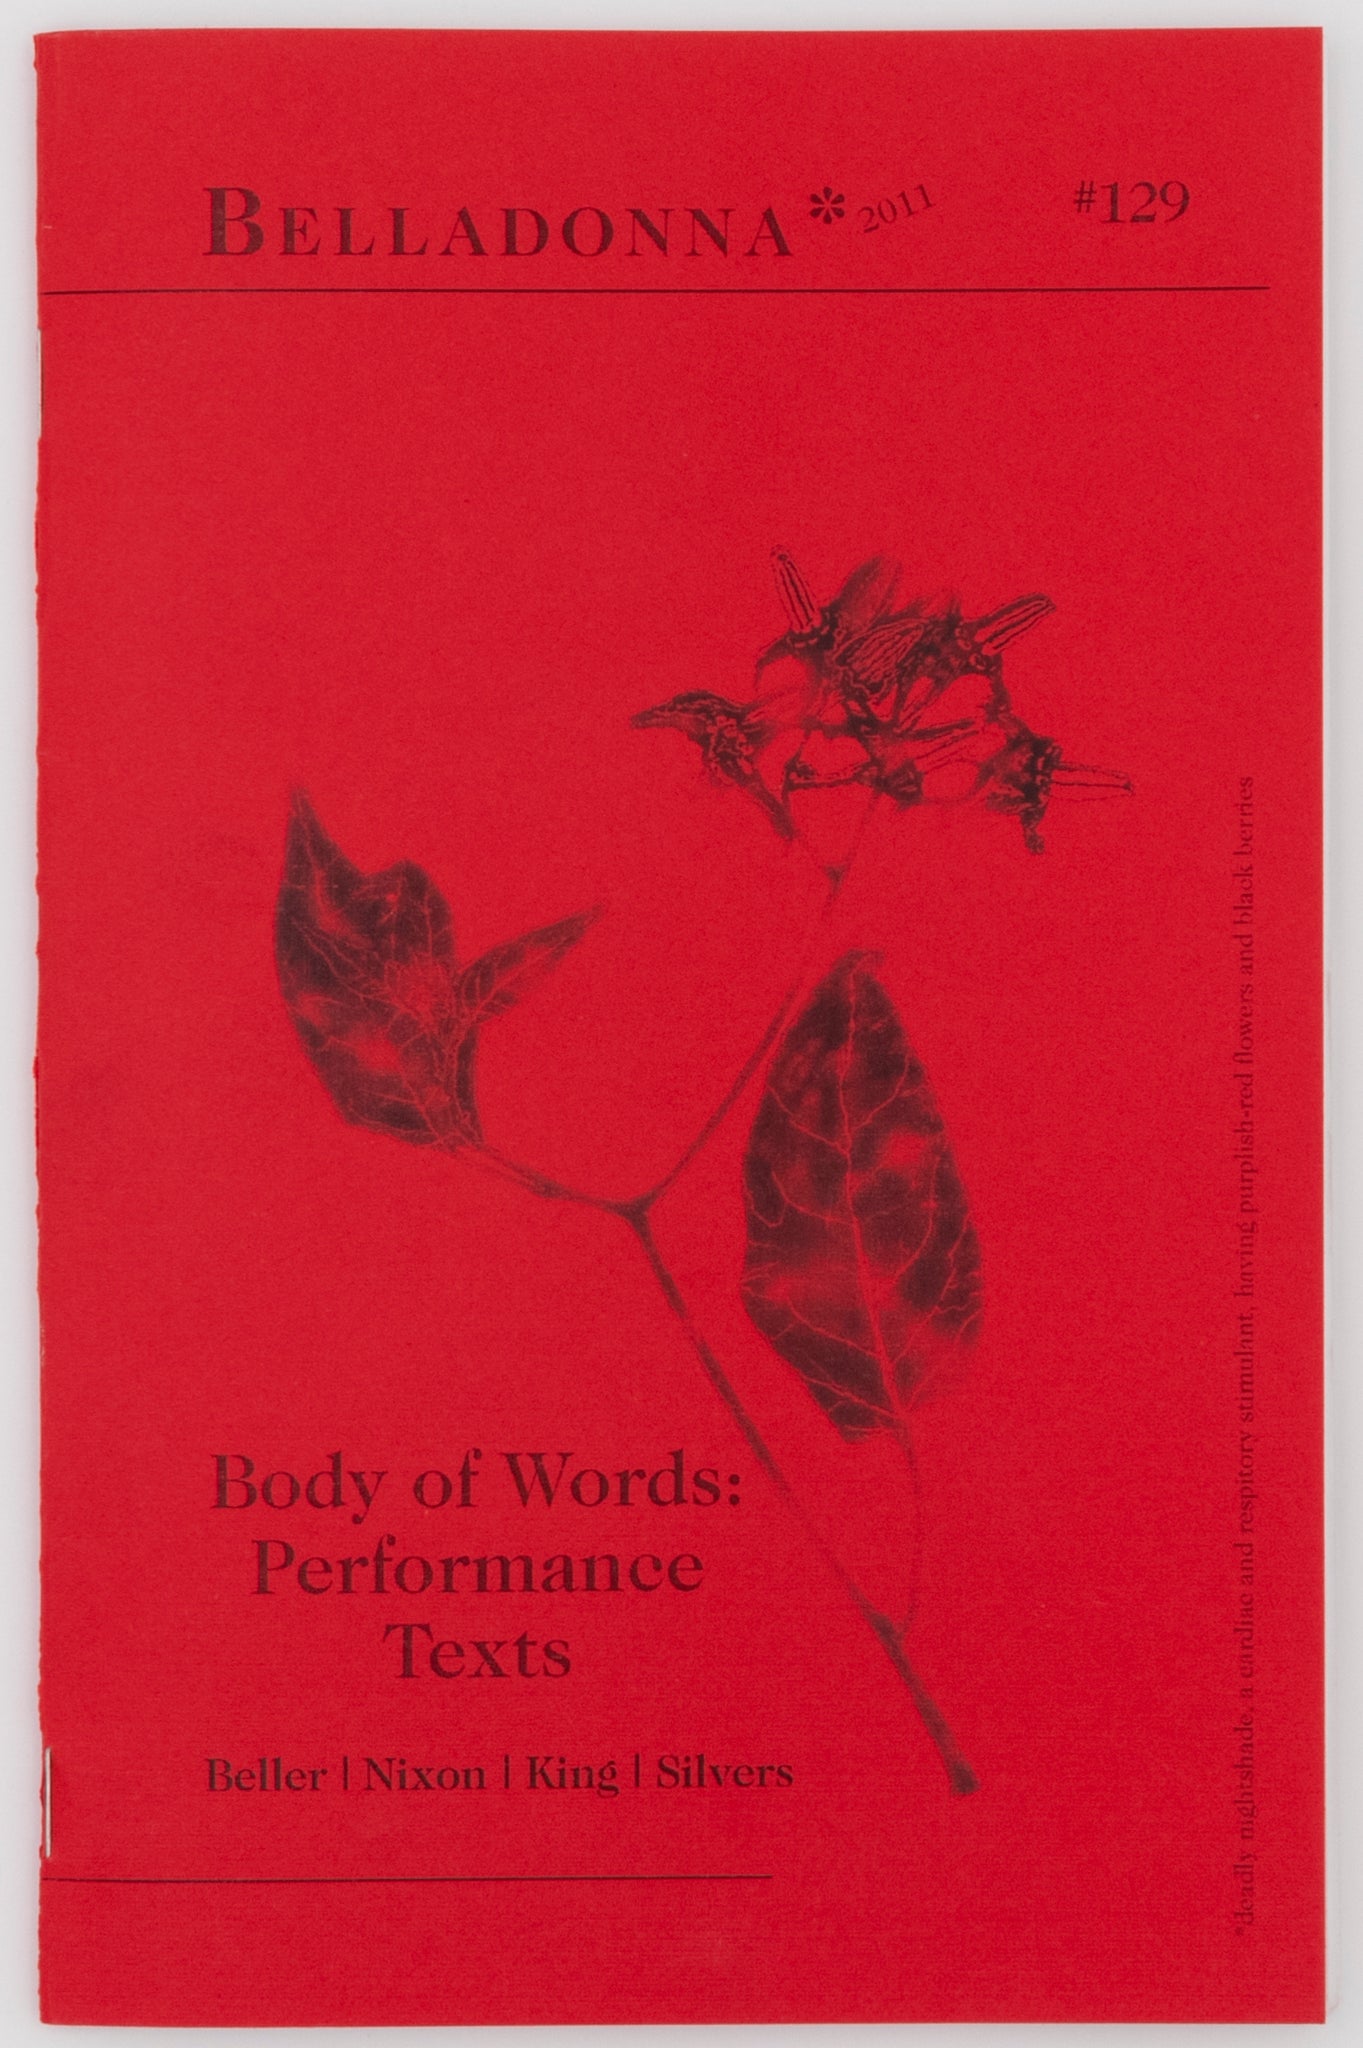 Body of Words: Performance Texts (Belladonna* #129)